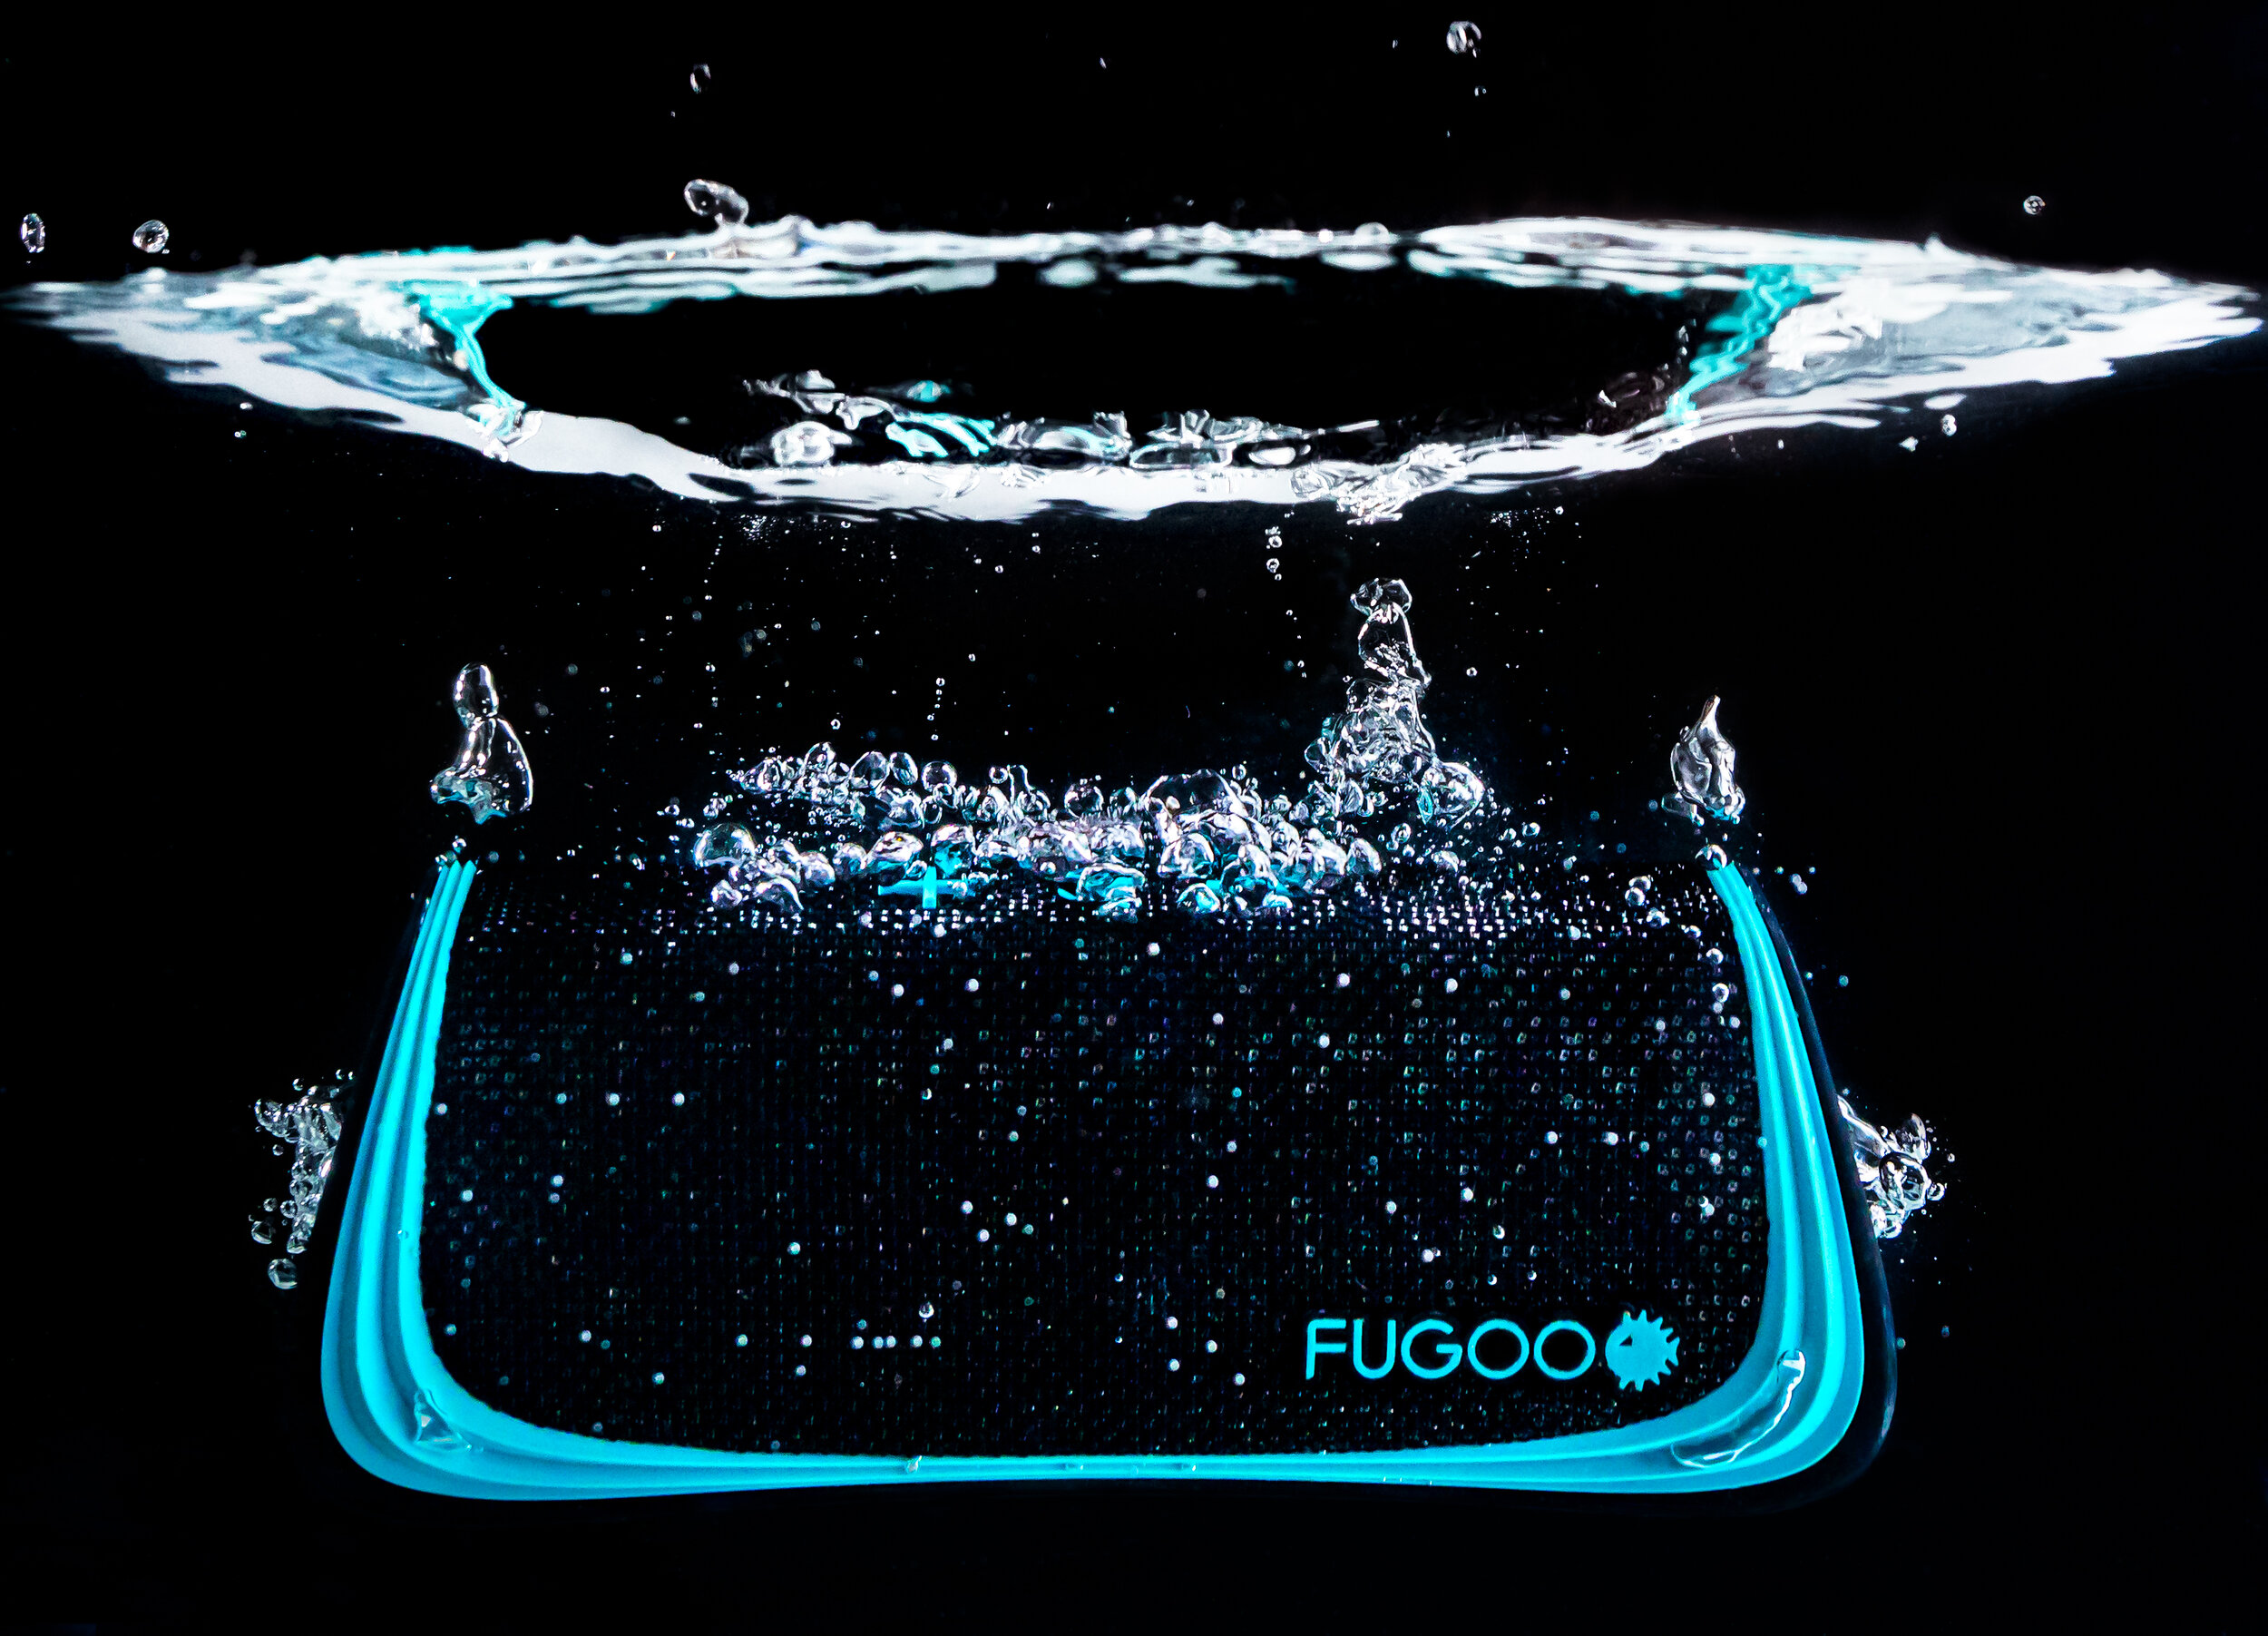 Fugoo_Underwater-Spash-1.jpg